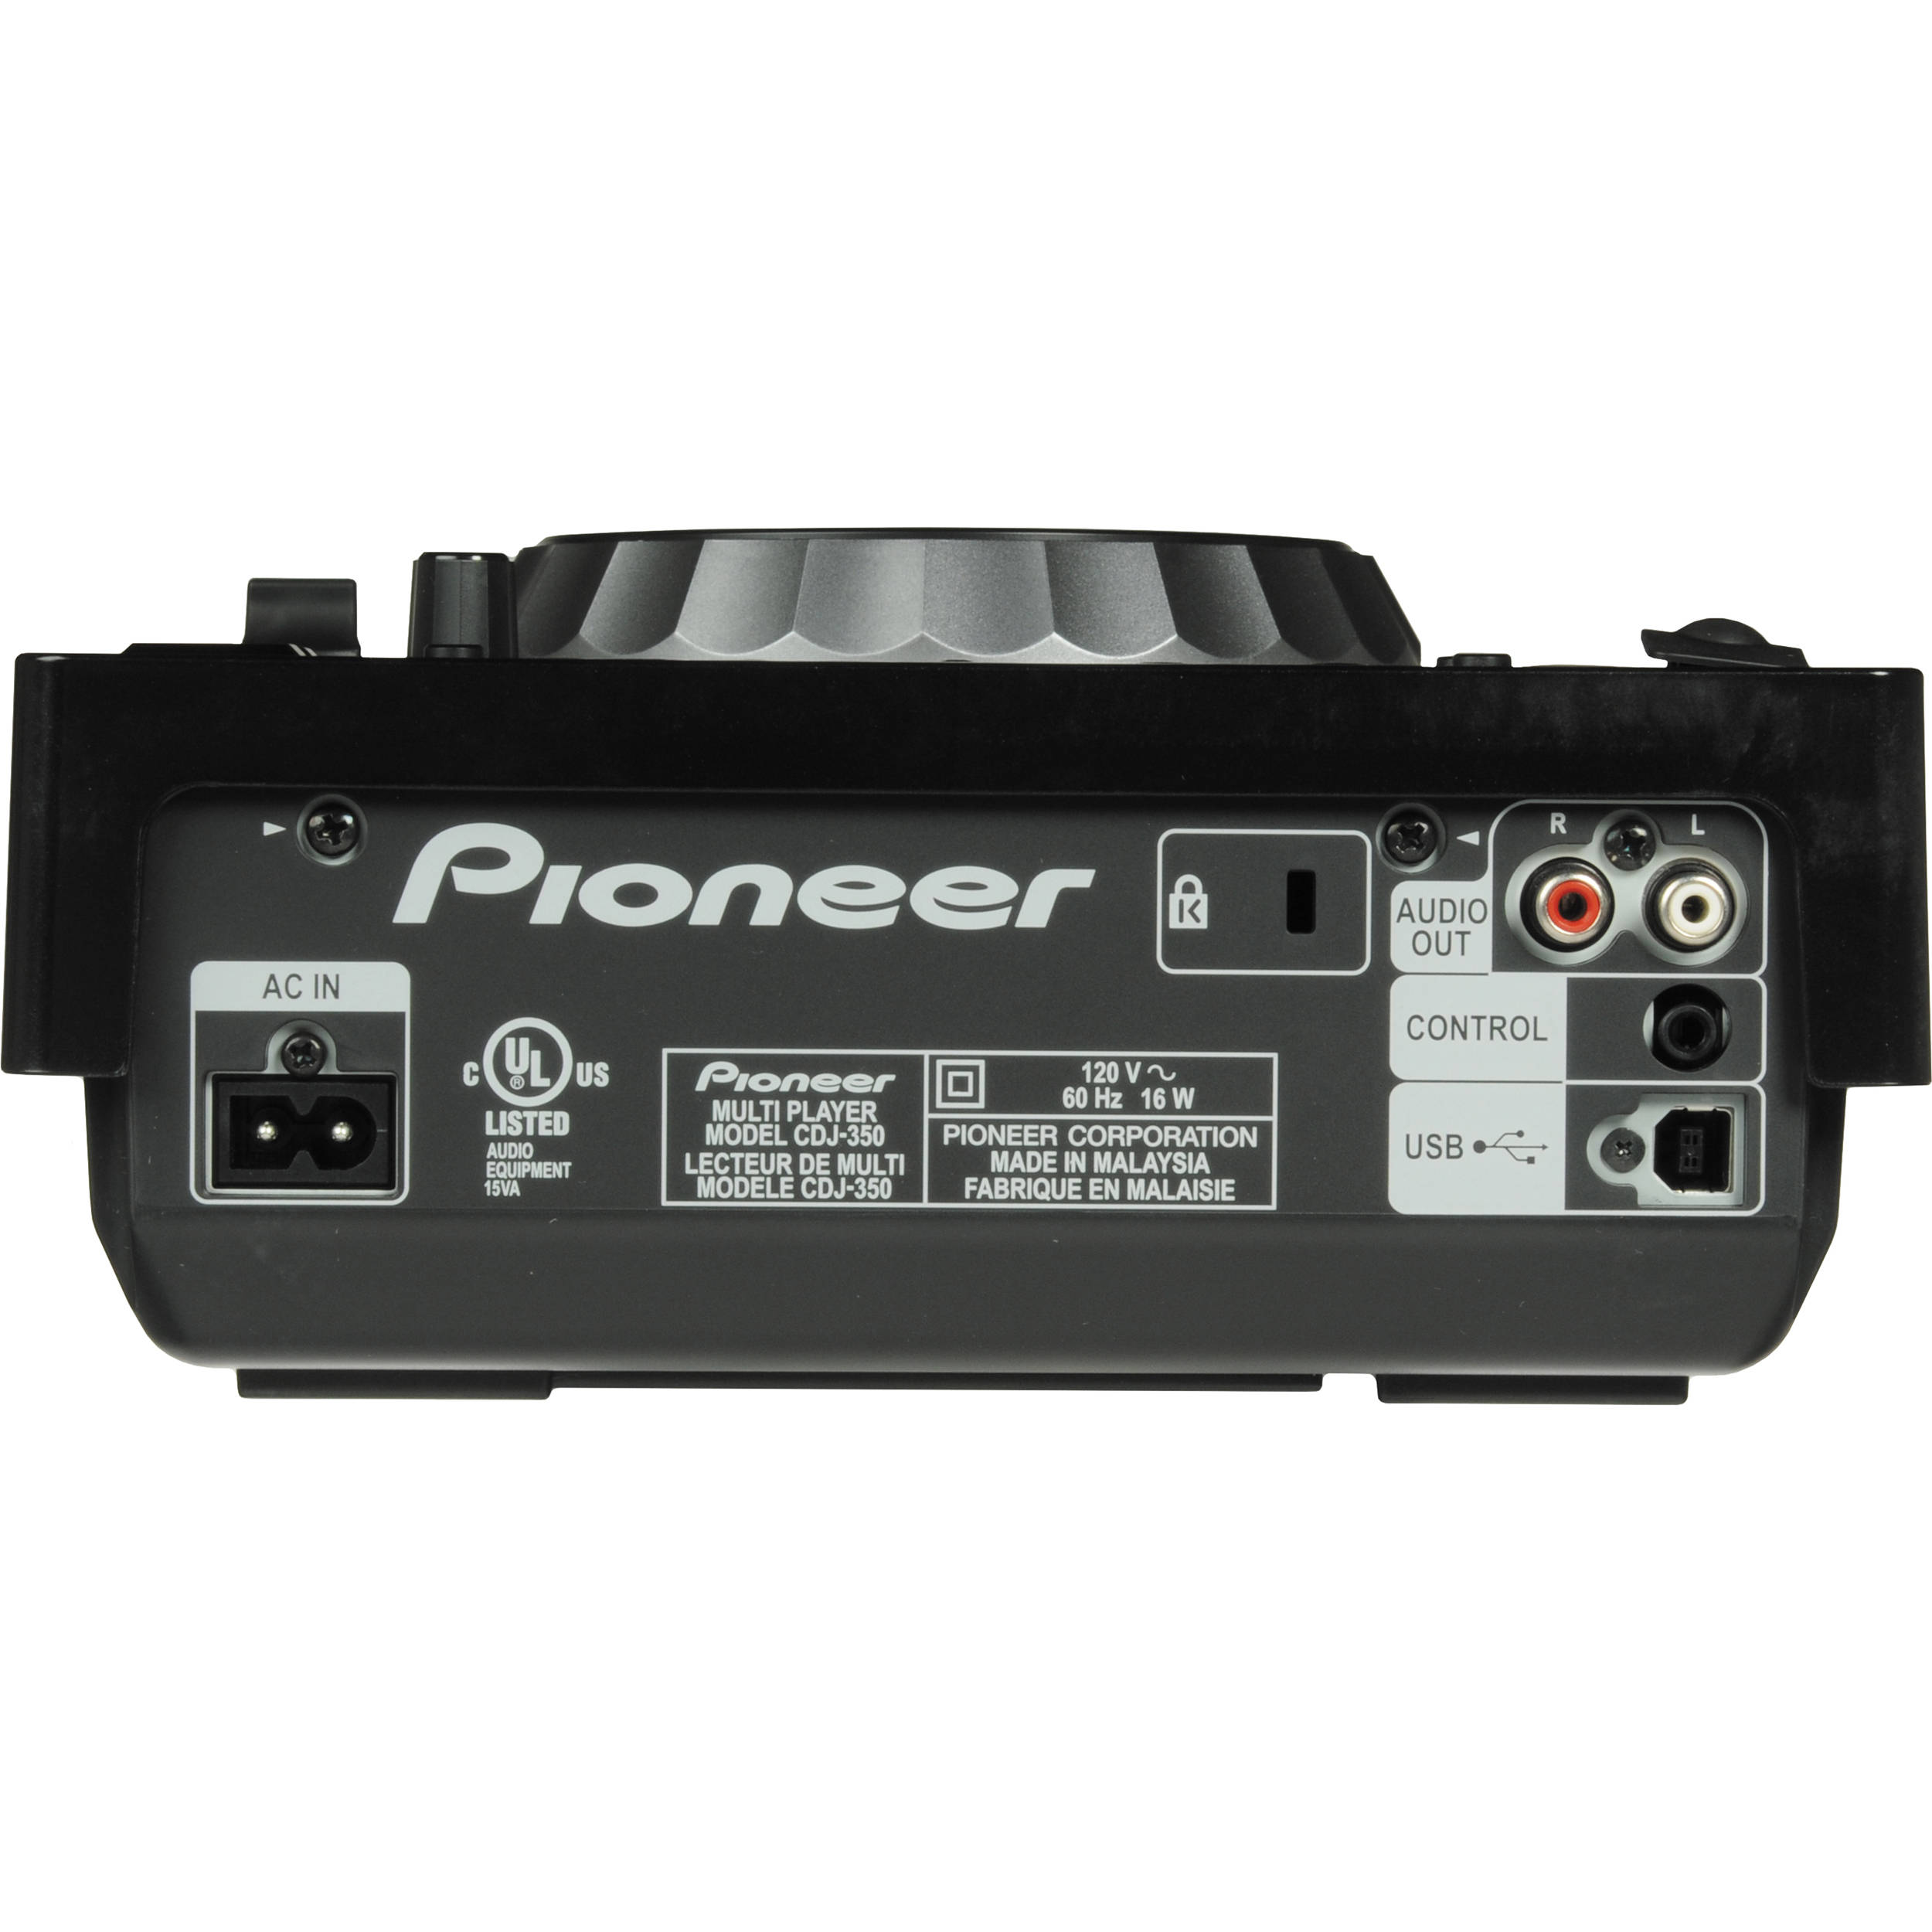 Pioneer Cdj 350 Digital Multi Player Black Cdj 350 B H Photo